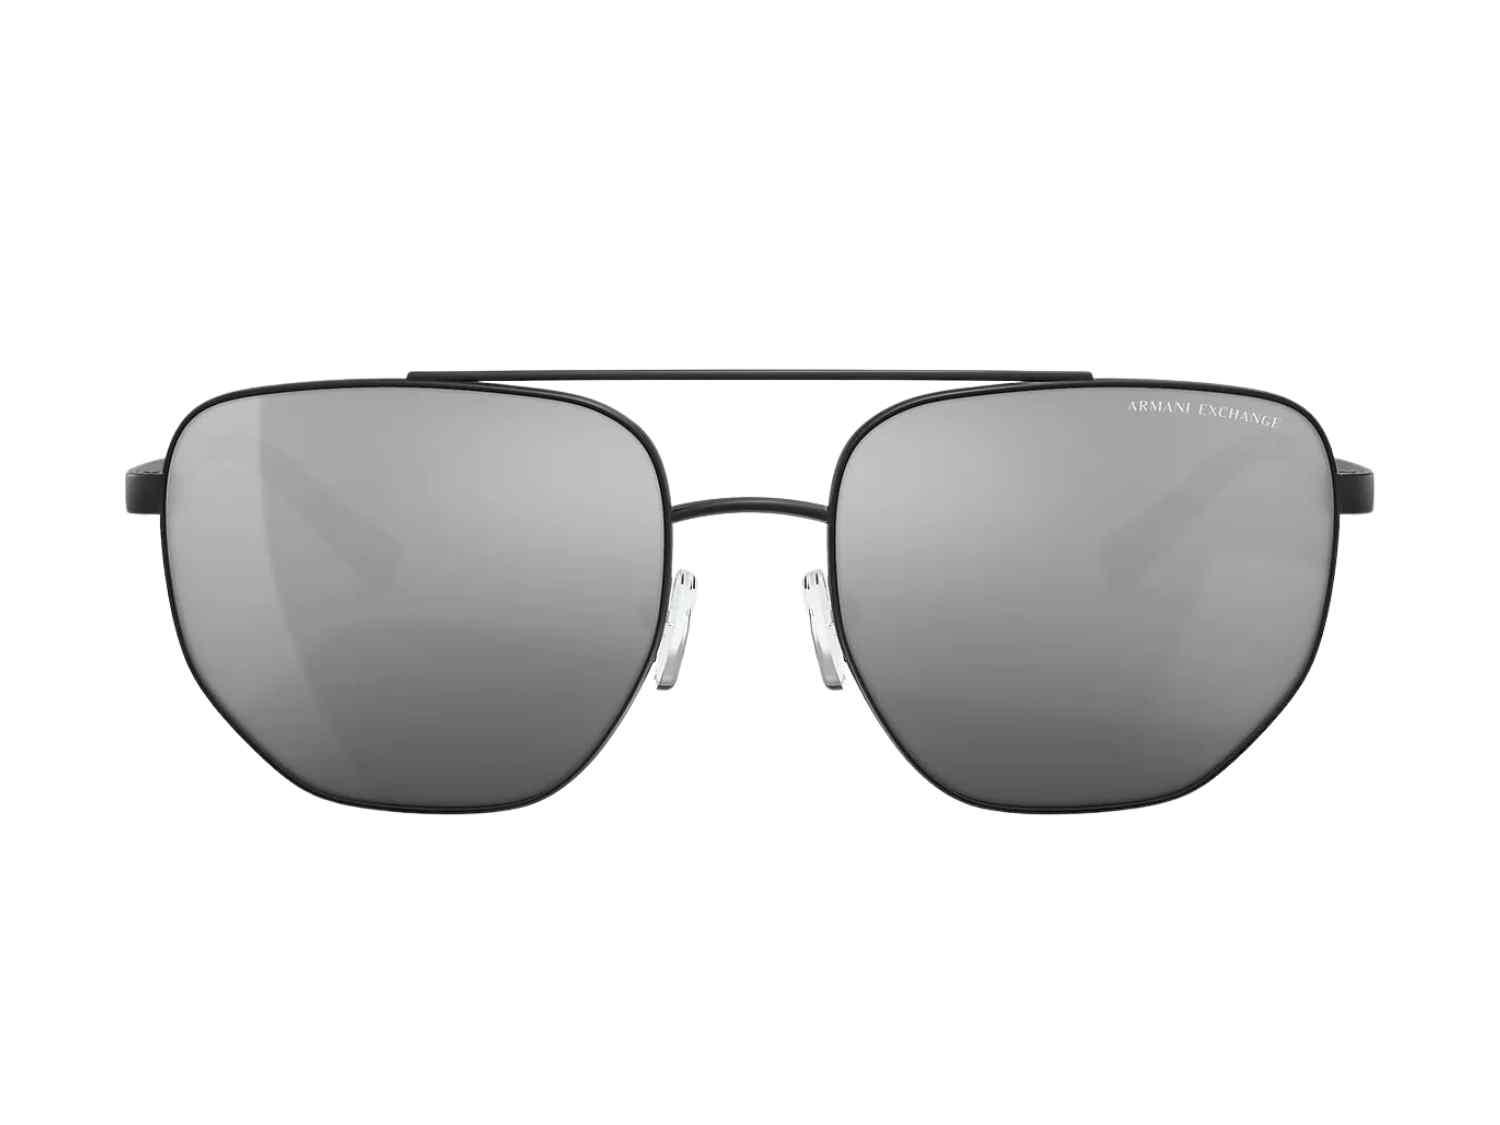 sunglasses, designer sunglasses, armani exchnage sunglasses, vision 770, vision770, sunglasses in canada at best price, sunglasses in quebec, sunglasses in montreal